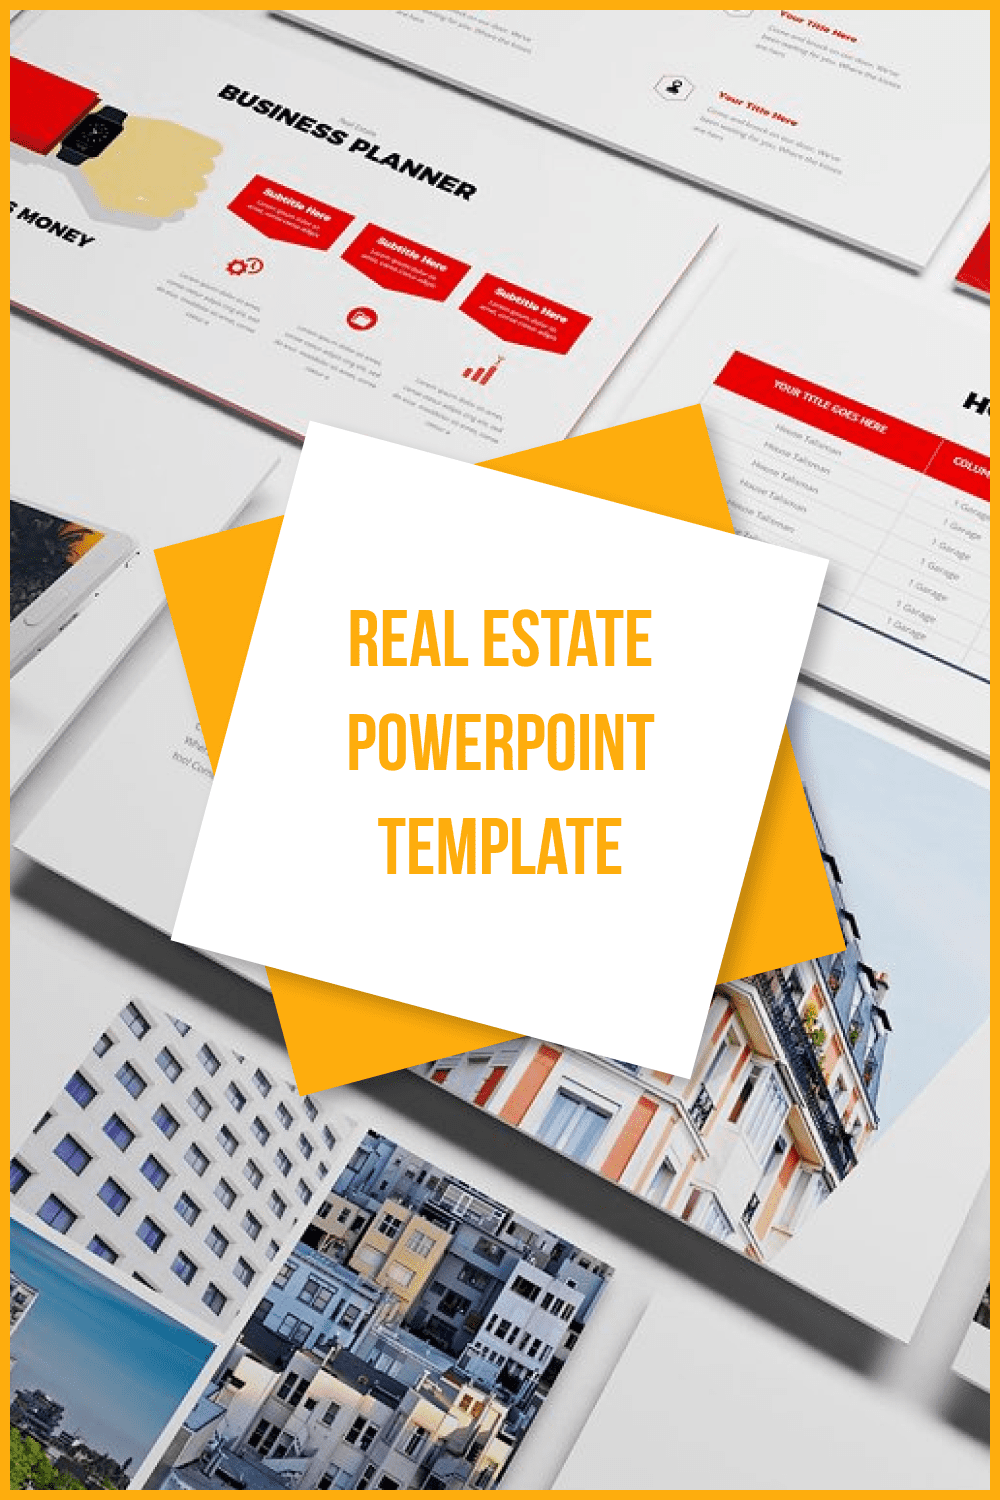 Pinterest Real Estate Powerpoint Templat.